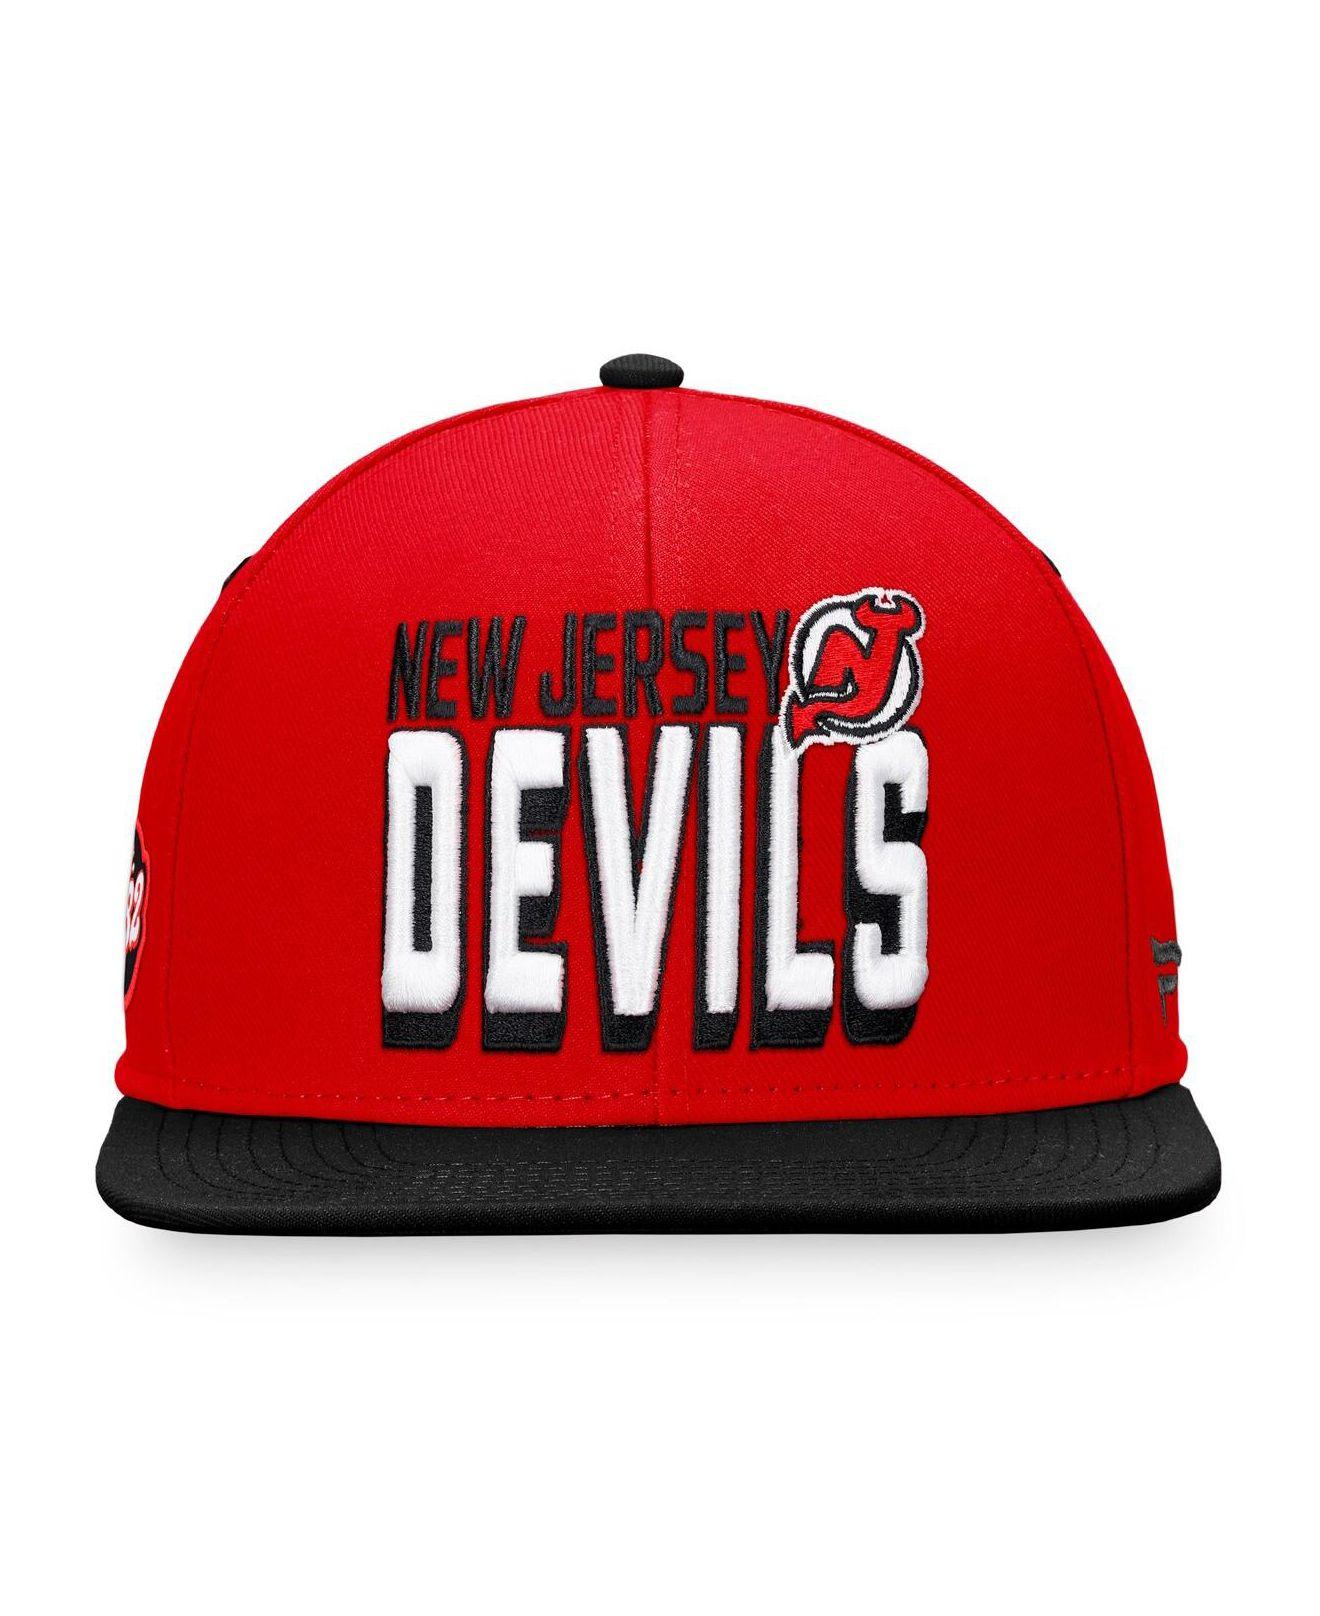 Men's Fanatics Branded Black/White New Jersey Devils Authentic Pro Rink Trucker  Snapback Hat